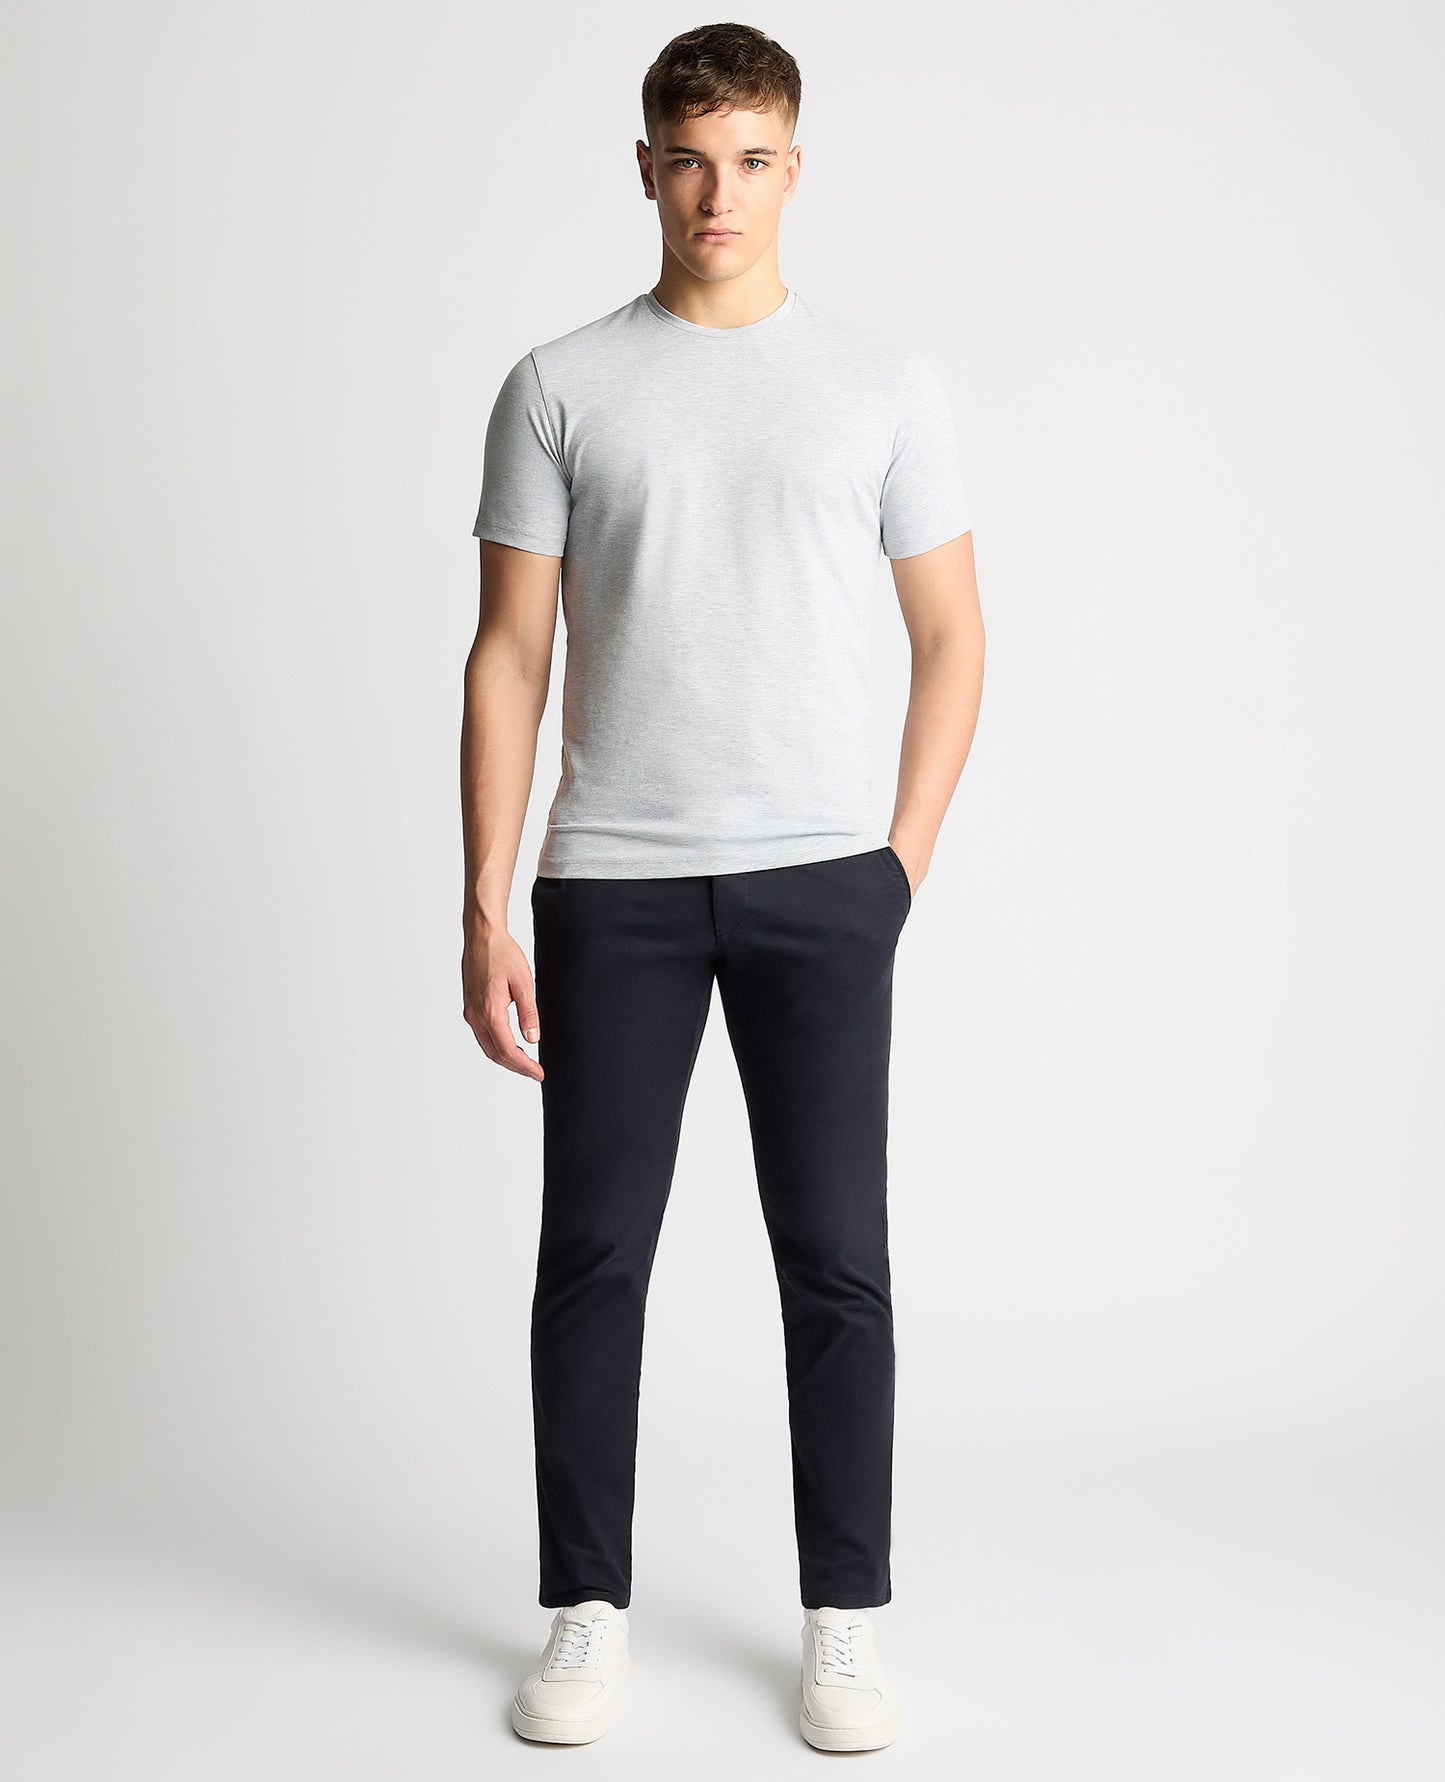 Remus Uomo 53121A 02 Light Grey Plain Branded T-Shirt